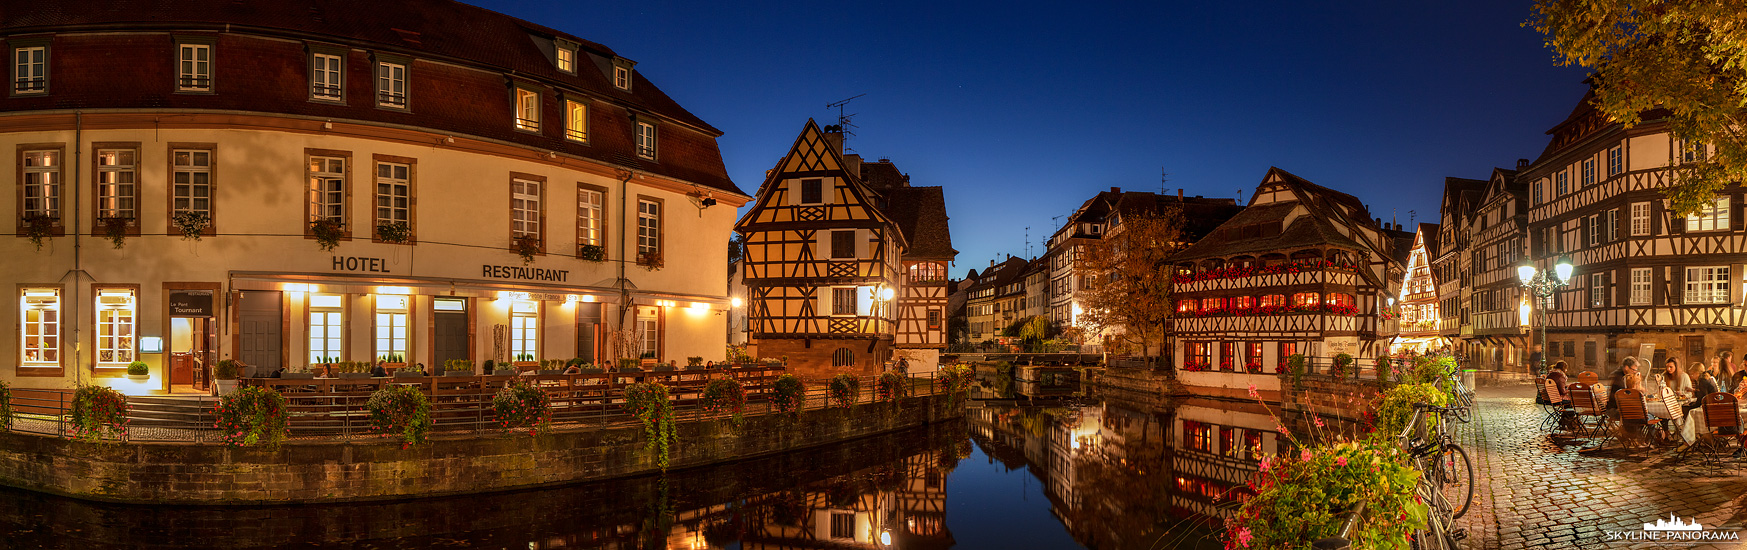 La Petite France - Altstadt Straßburg (p_01153)